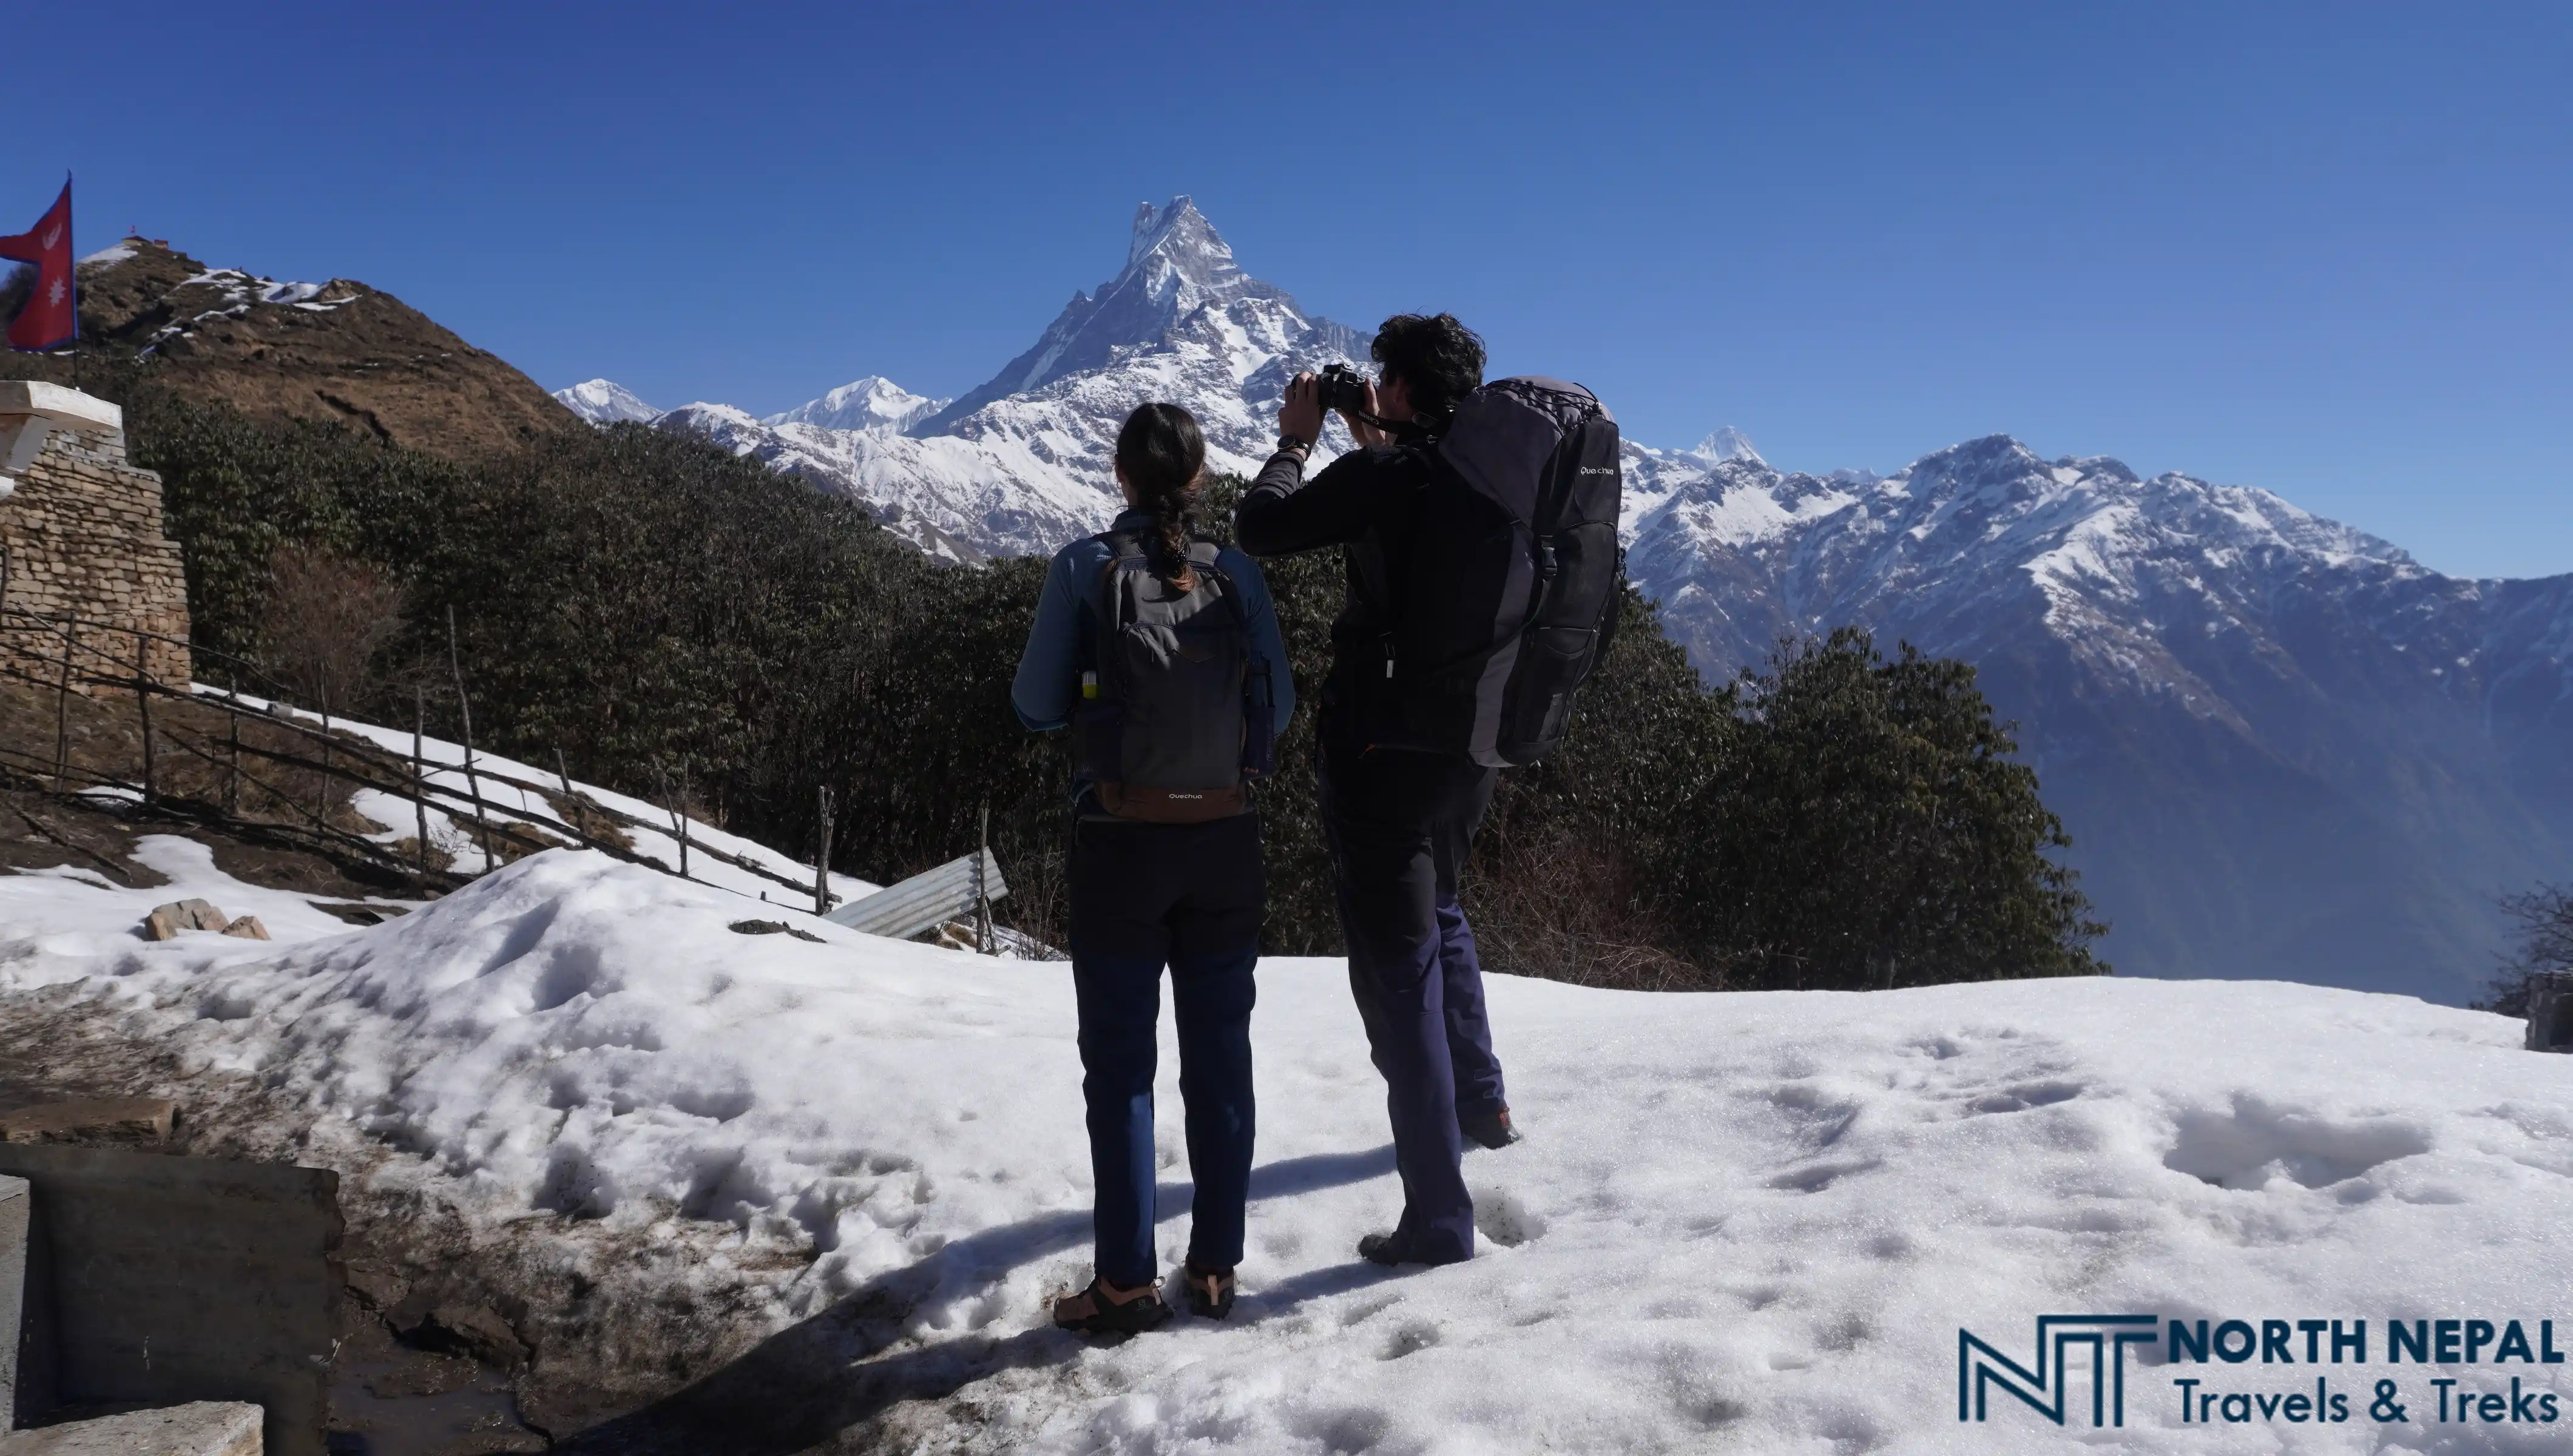 Trekkers from North Nepal Trek enjoying the views during Mardi Himal Trek